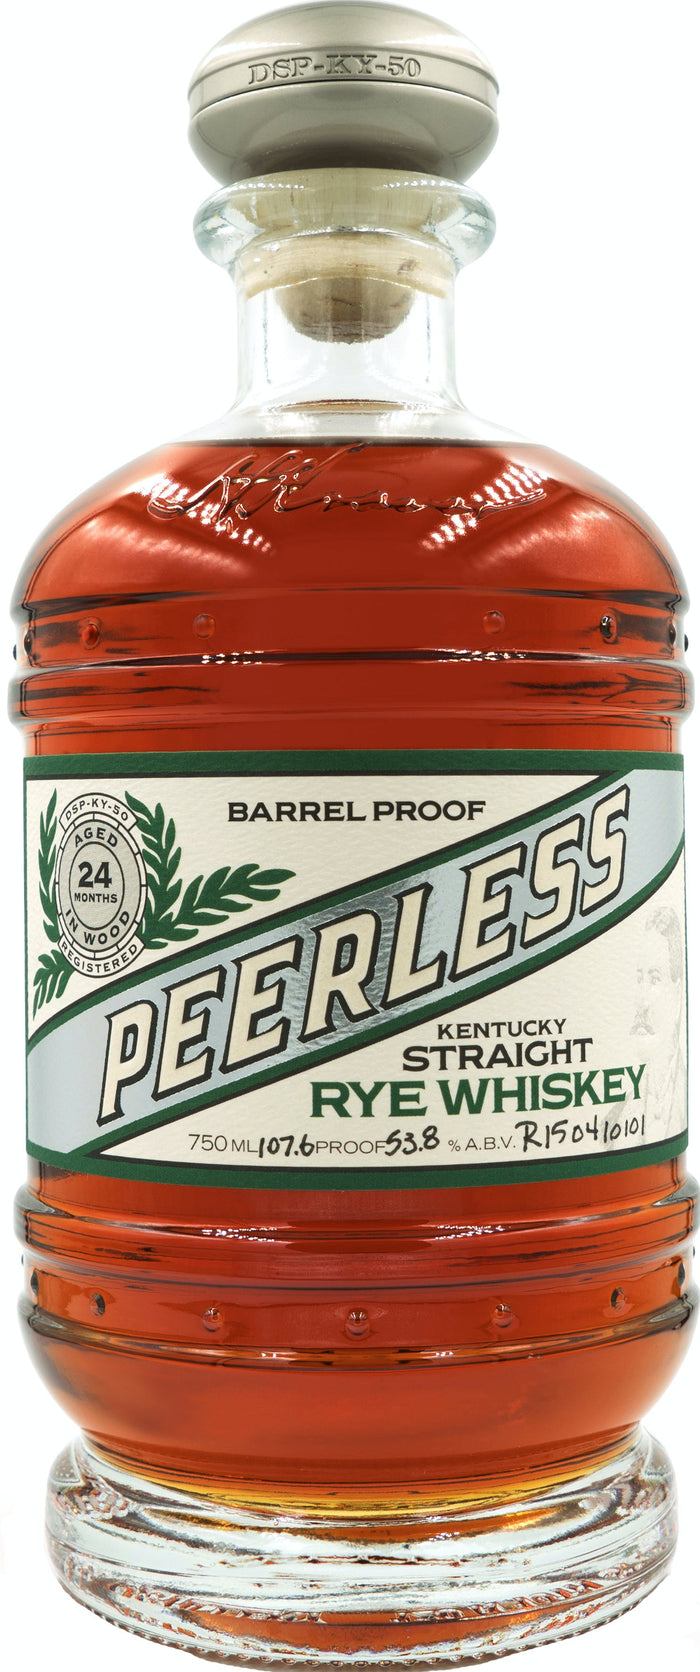 Peerless Barrel Proof 107.8 Kentucky Straight Rye Whiskey